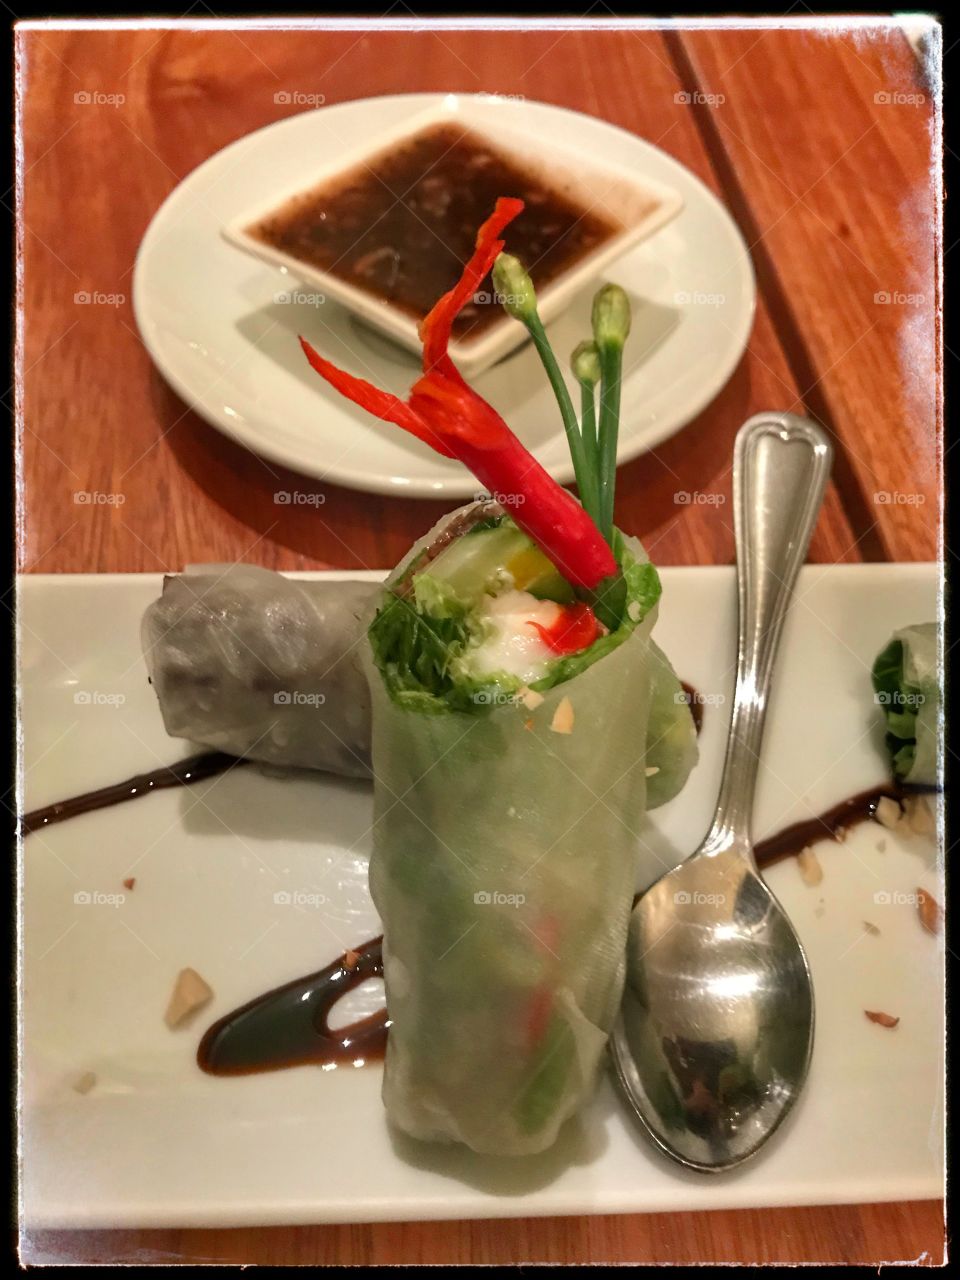 Siem Reap Restaurant take on fresh spring roll